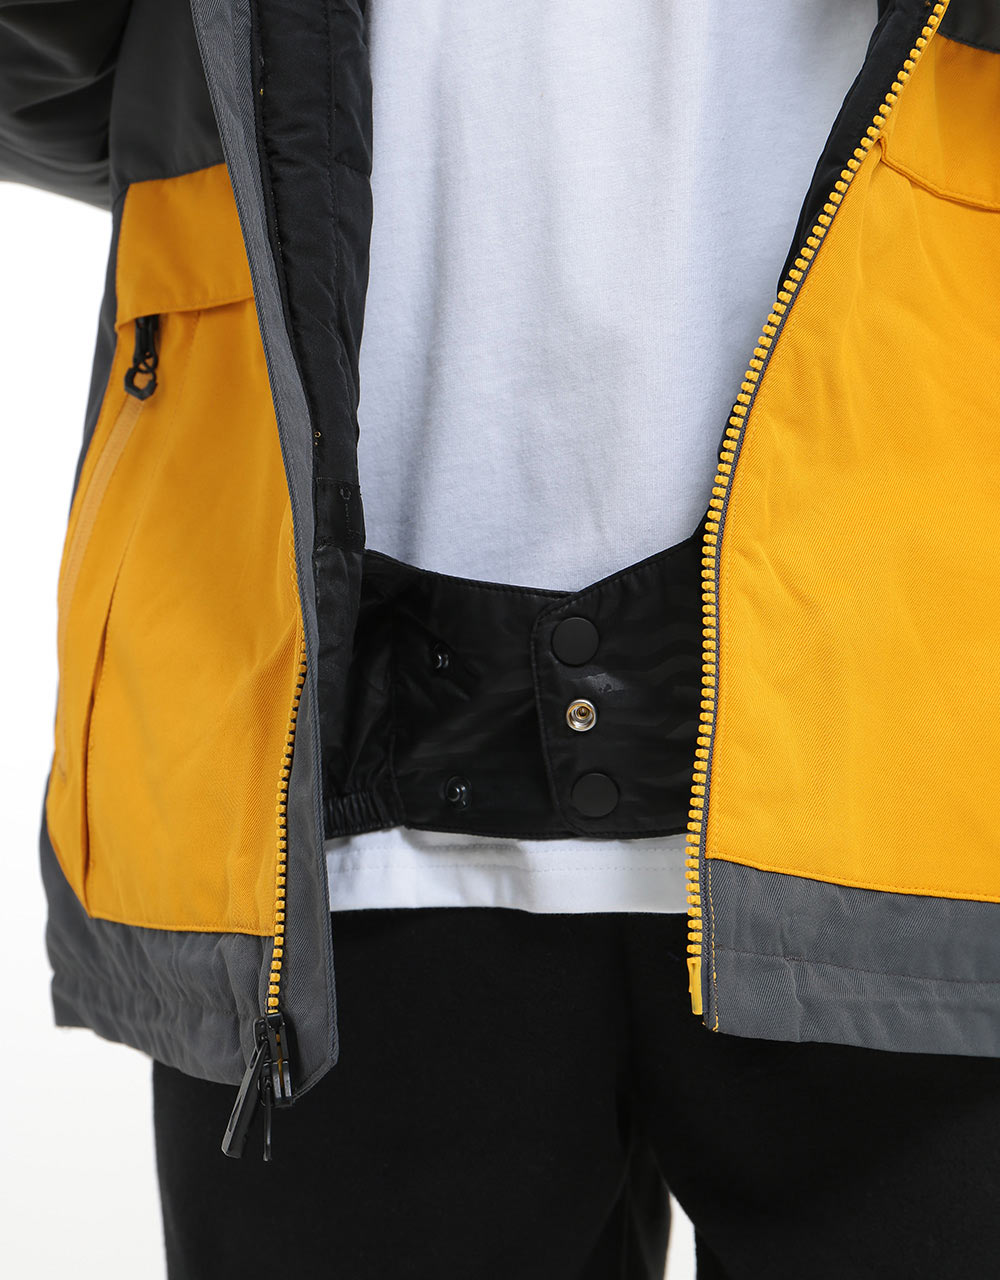 Volcom Deadlystones Insulated Snowboard Jacket - Dark Grey